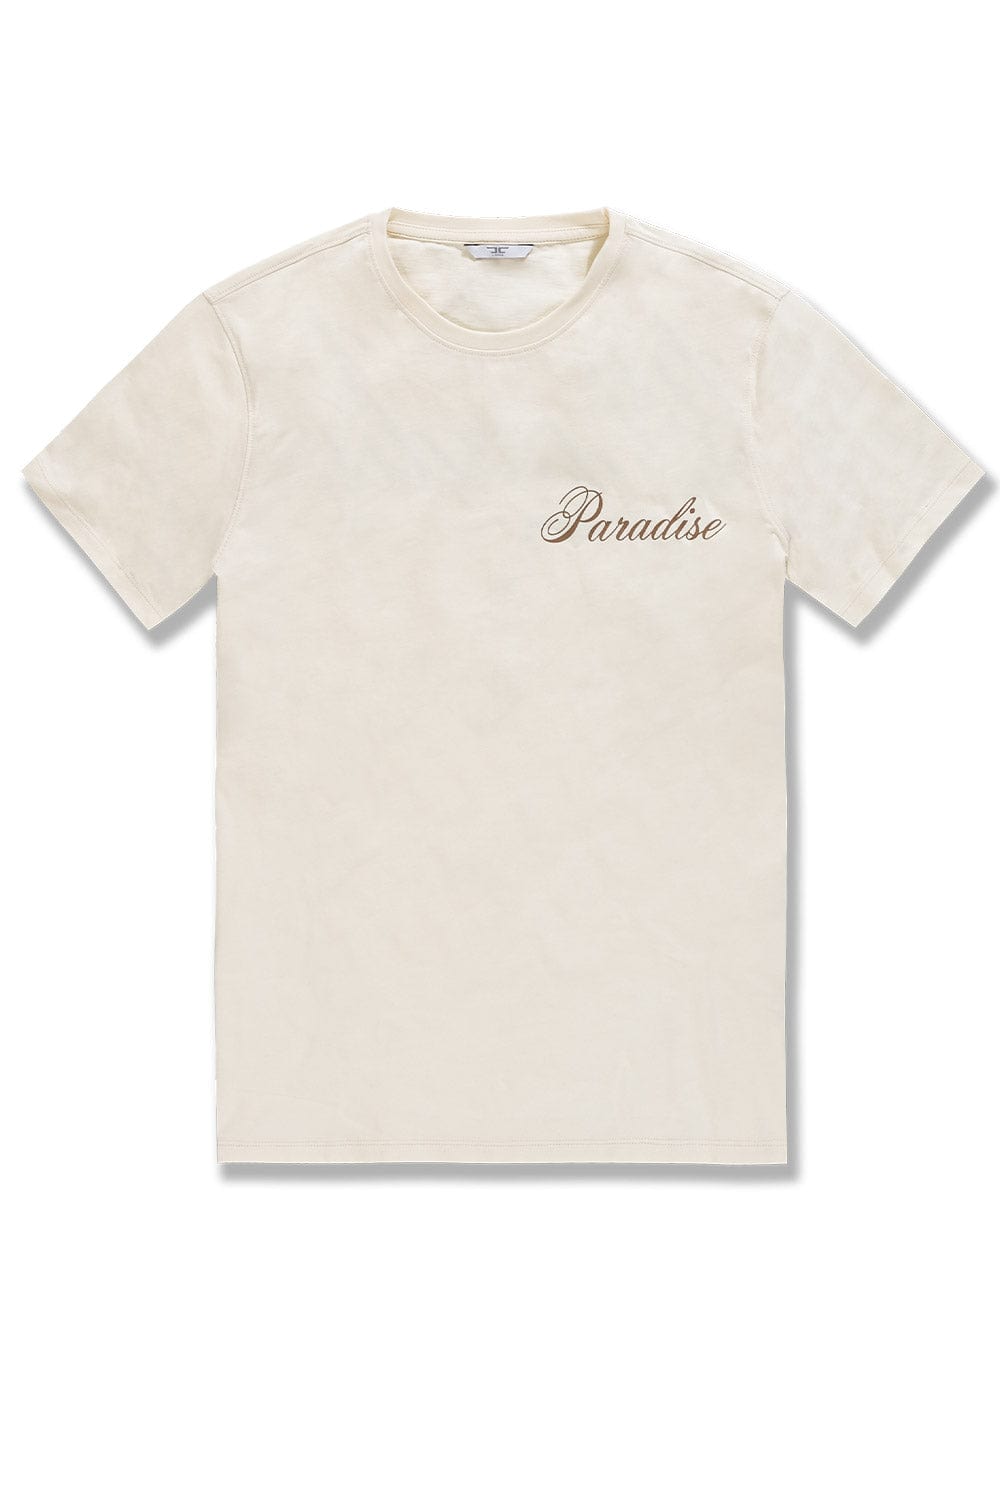 BB Paradise T-Shirt (Cream)